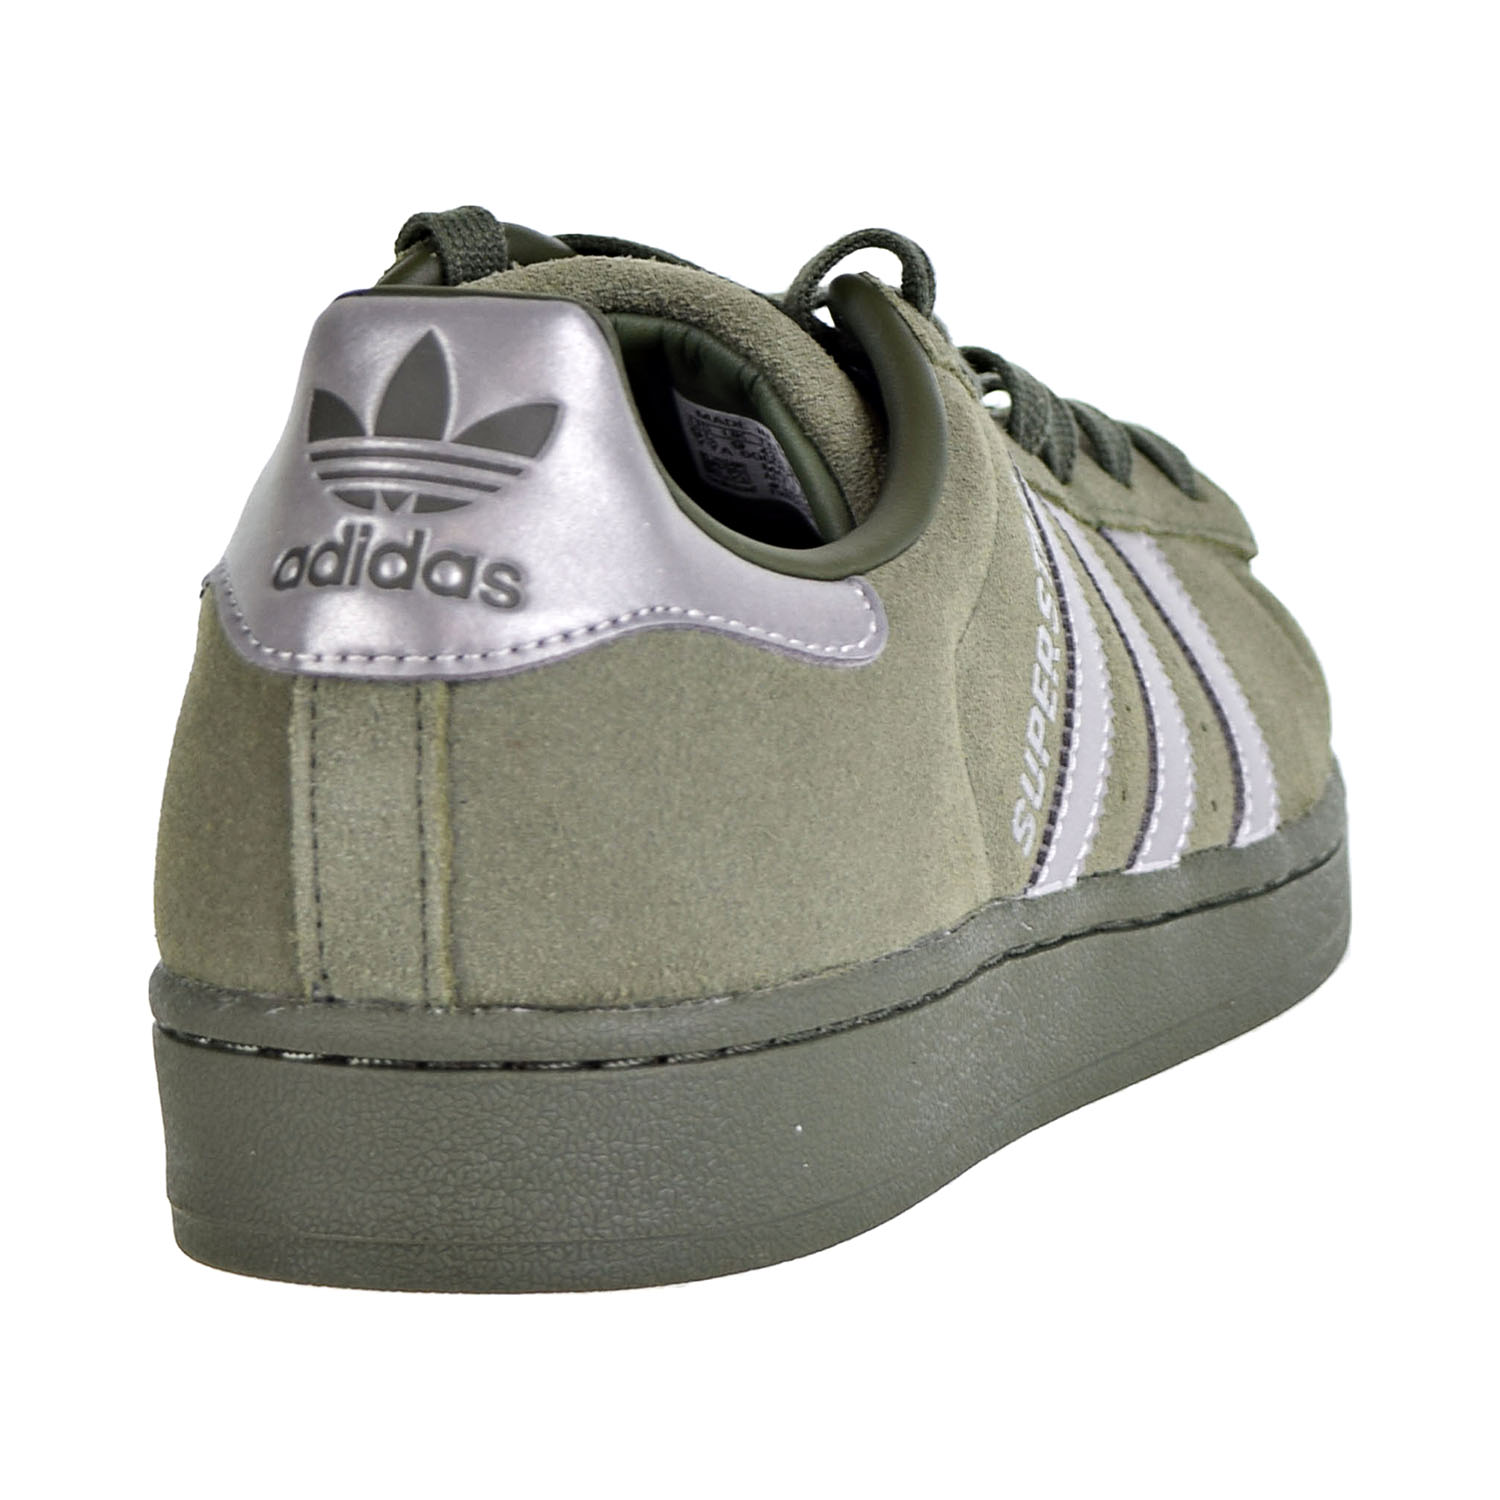 Adidas Superstar Men's Shoes Base Green-Black-Night Cargo B41988 | eBay